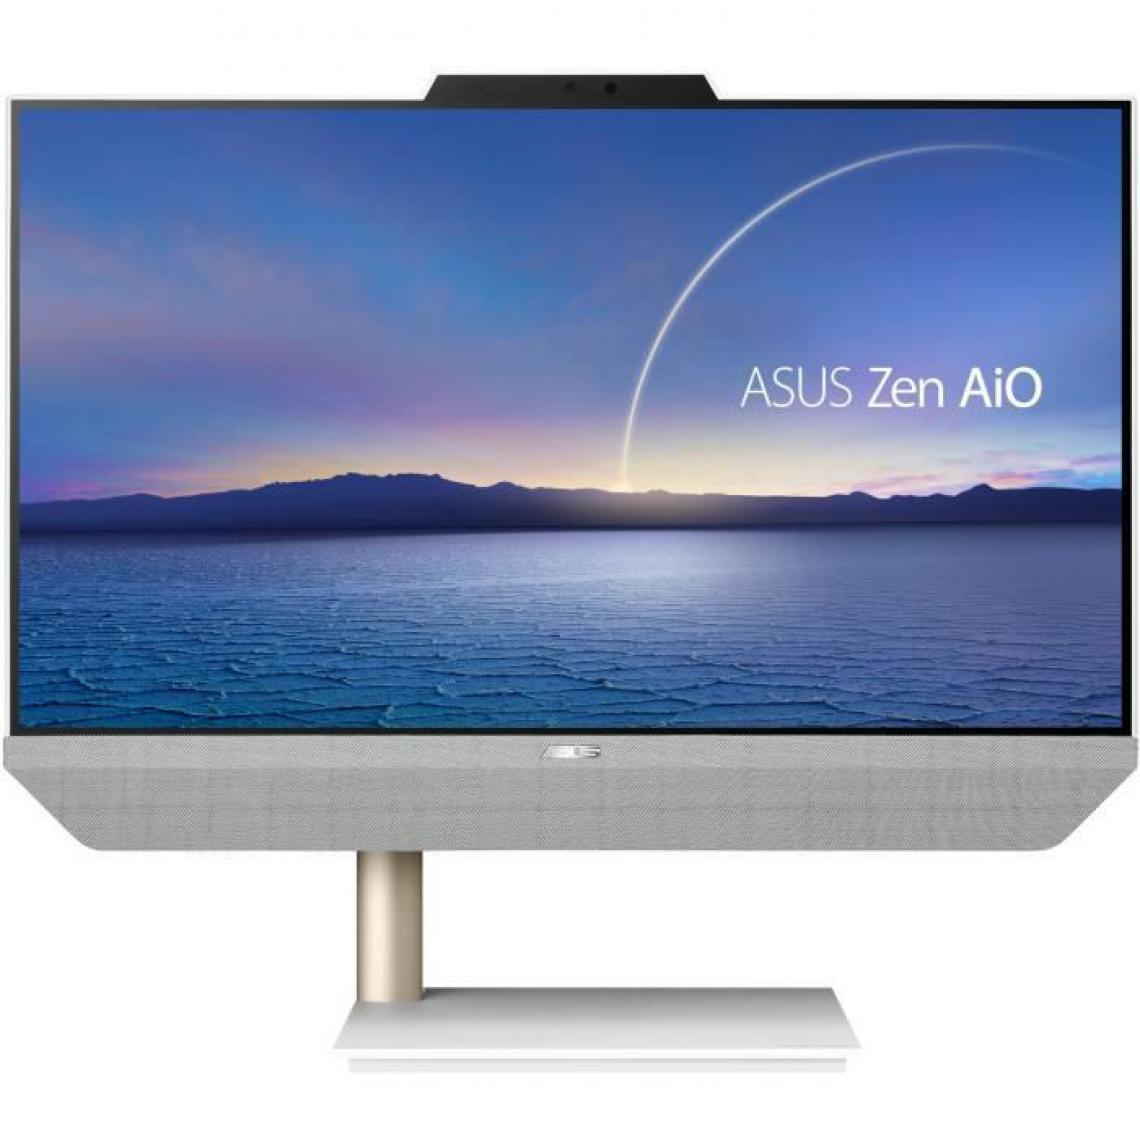 Asus - PC Tout-en-un ASUS Zen AIO 22 A5200WFAK-WA080T - 21.5' FHD - Core i3-10110U - RAM 8Go - Stockage SSD 256Go - Windows 10 - AZERTY - PC Fixe